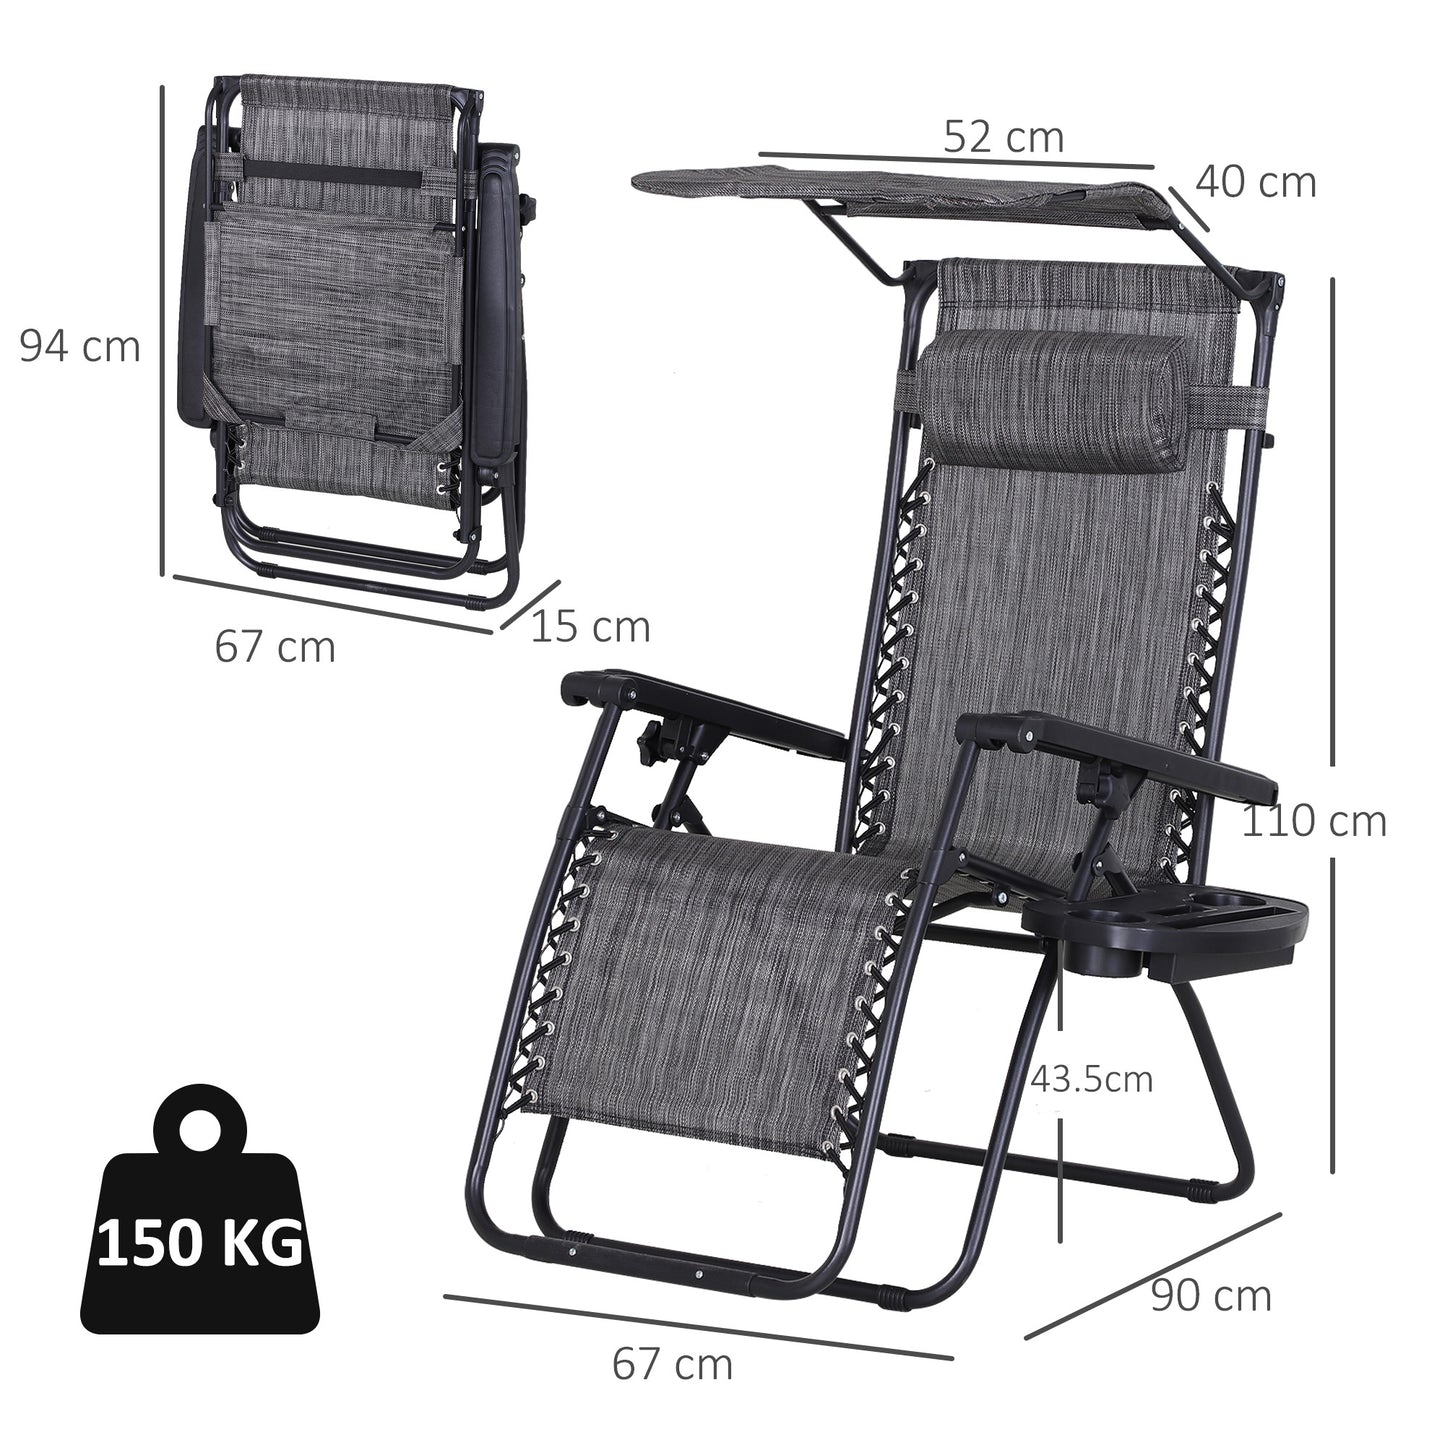 Outsunny Steel Frame Zero Gravity Outdoor Garden Deck Chair w/ Canopy Grey